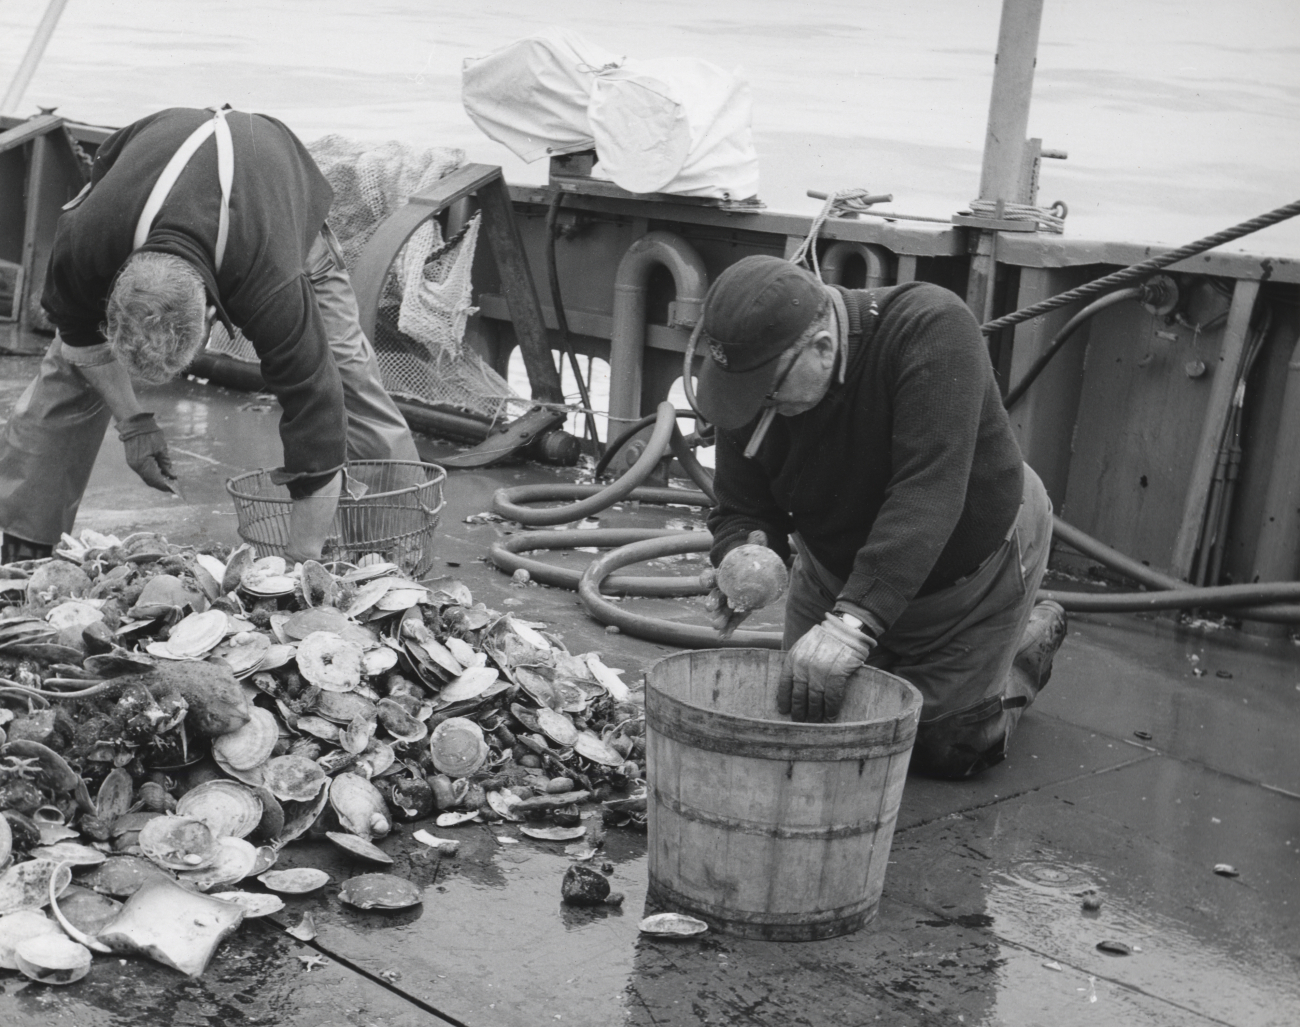 Cullingl live sea scallops out of dredge haul catch on board BCF ship 